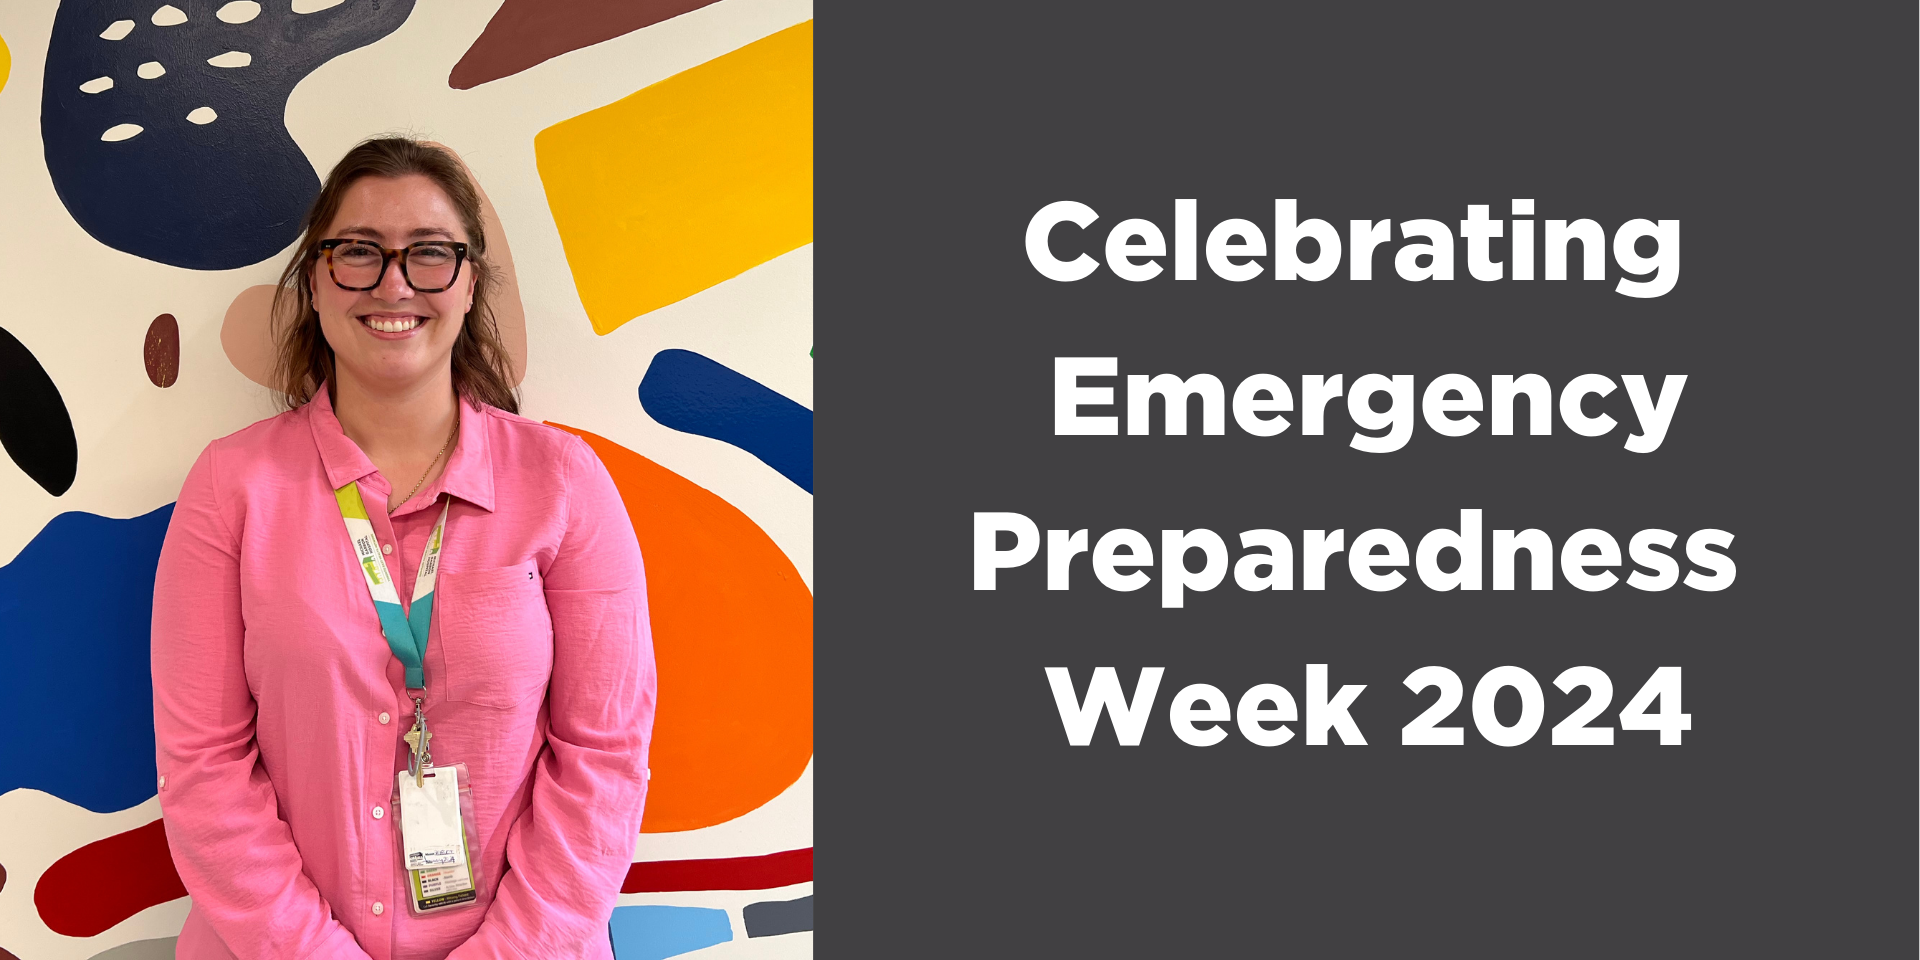 Celebrating Emergency Preparedness Week 2024